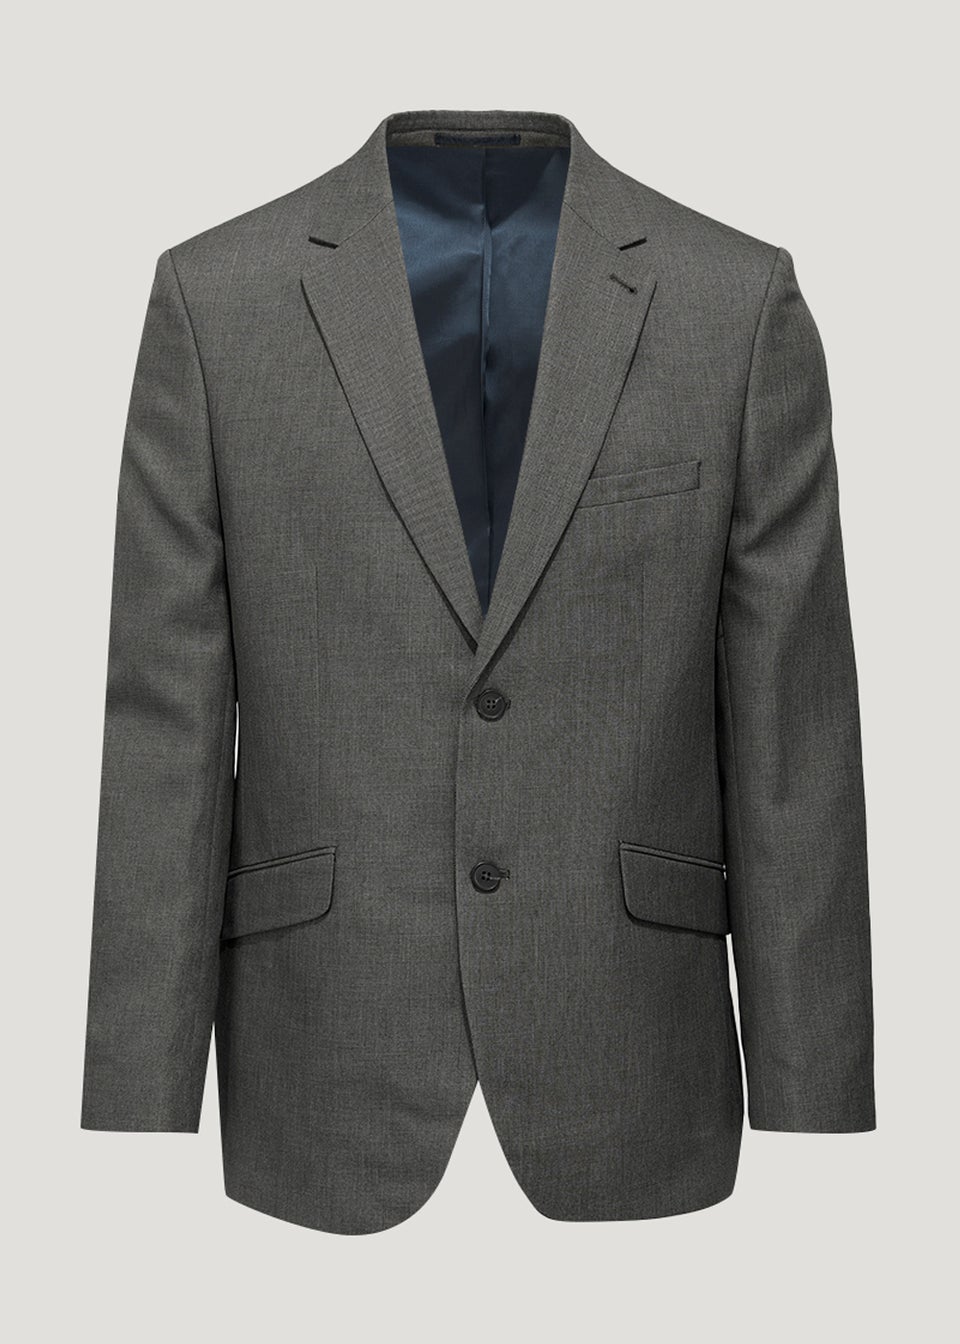 Taylor & Wright Austen Charcoal Regular Fit Suit Jacket - Matalan